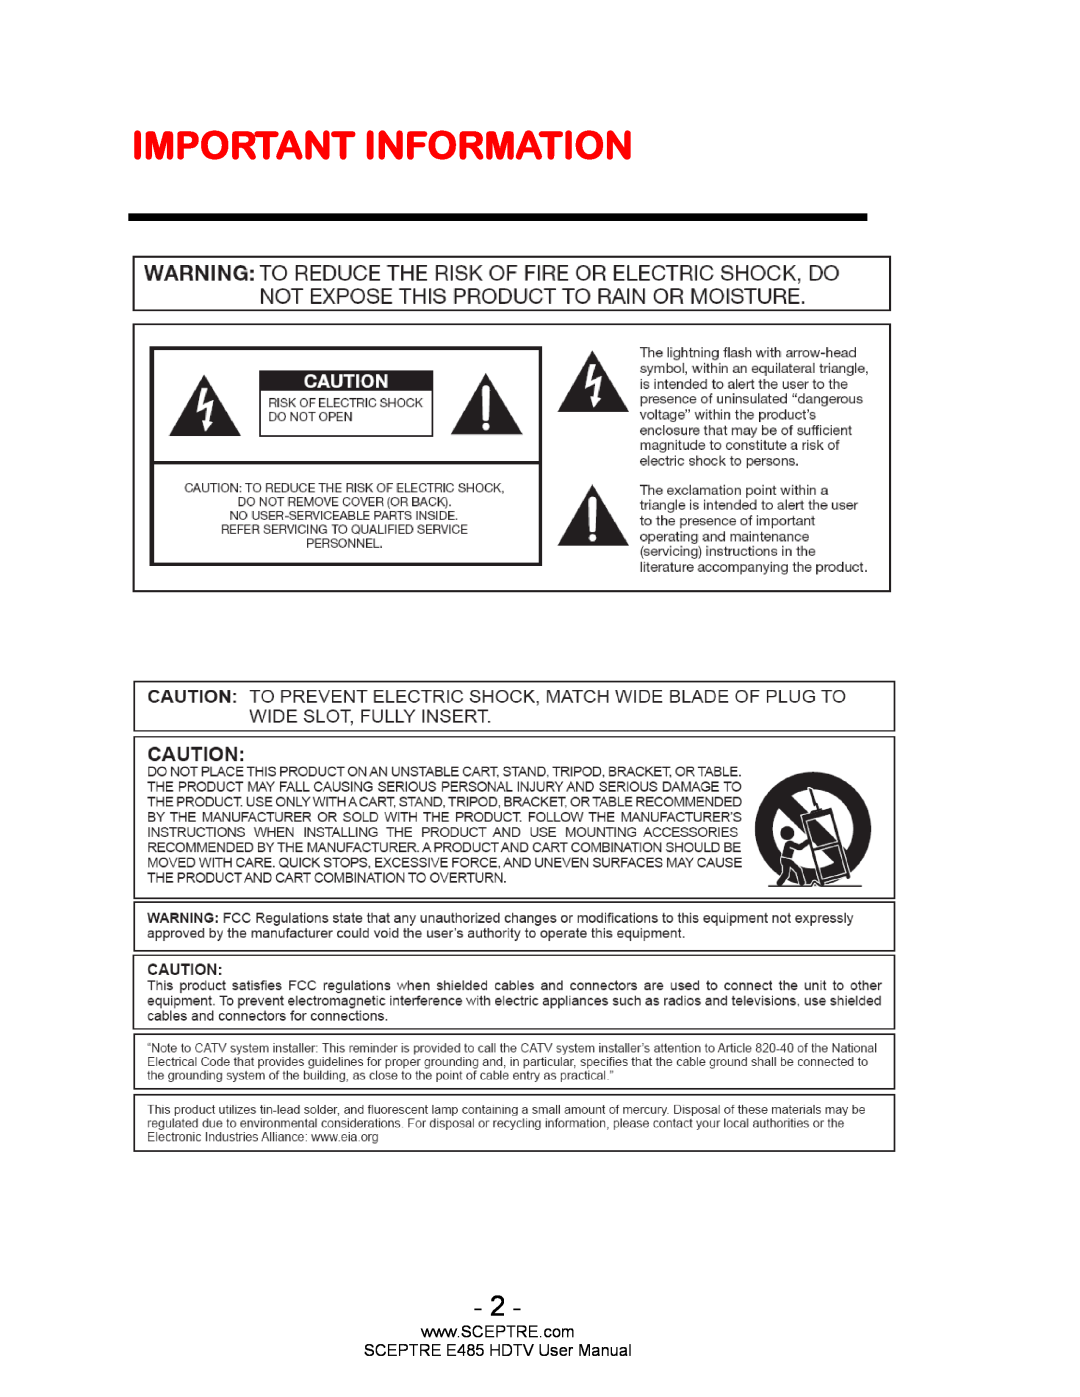 Sceptre Technologies user manual Important Information, SCEPTRE E485 HDTV User Manual 